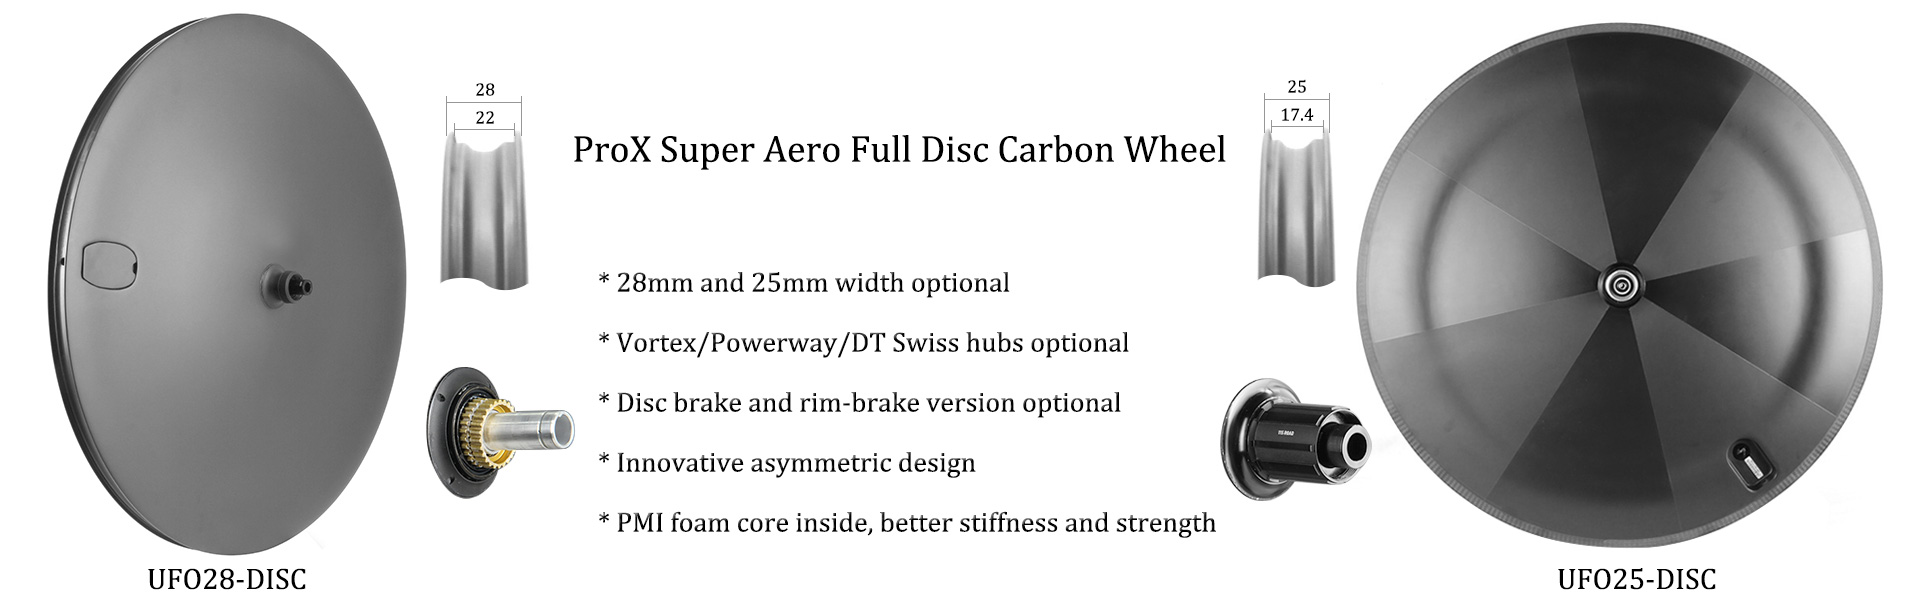 ProX Super Aero Full Disc Caroon Wheel